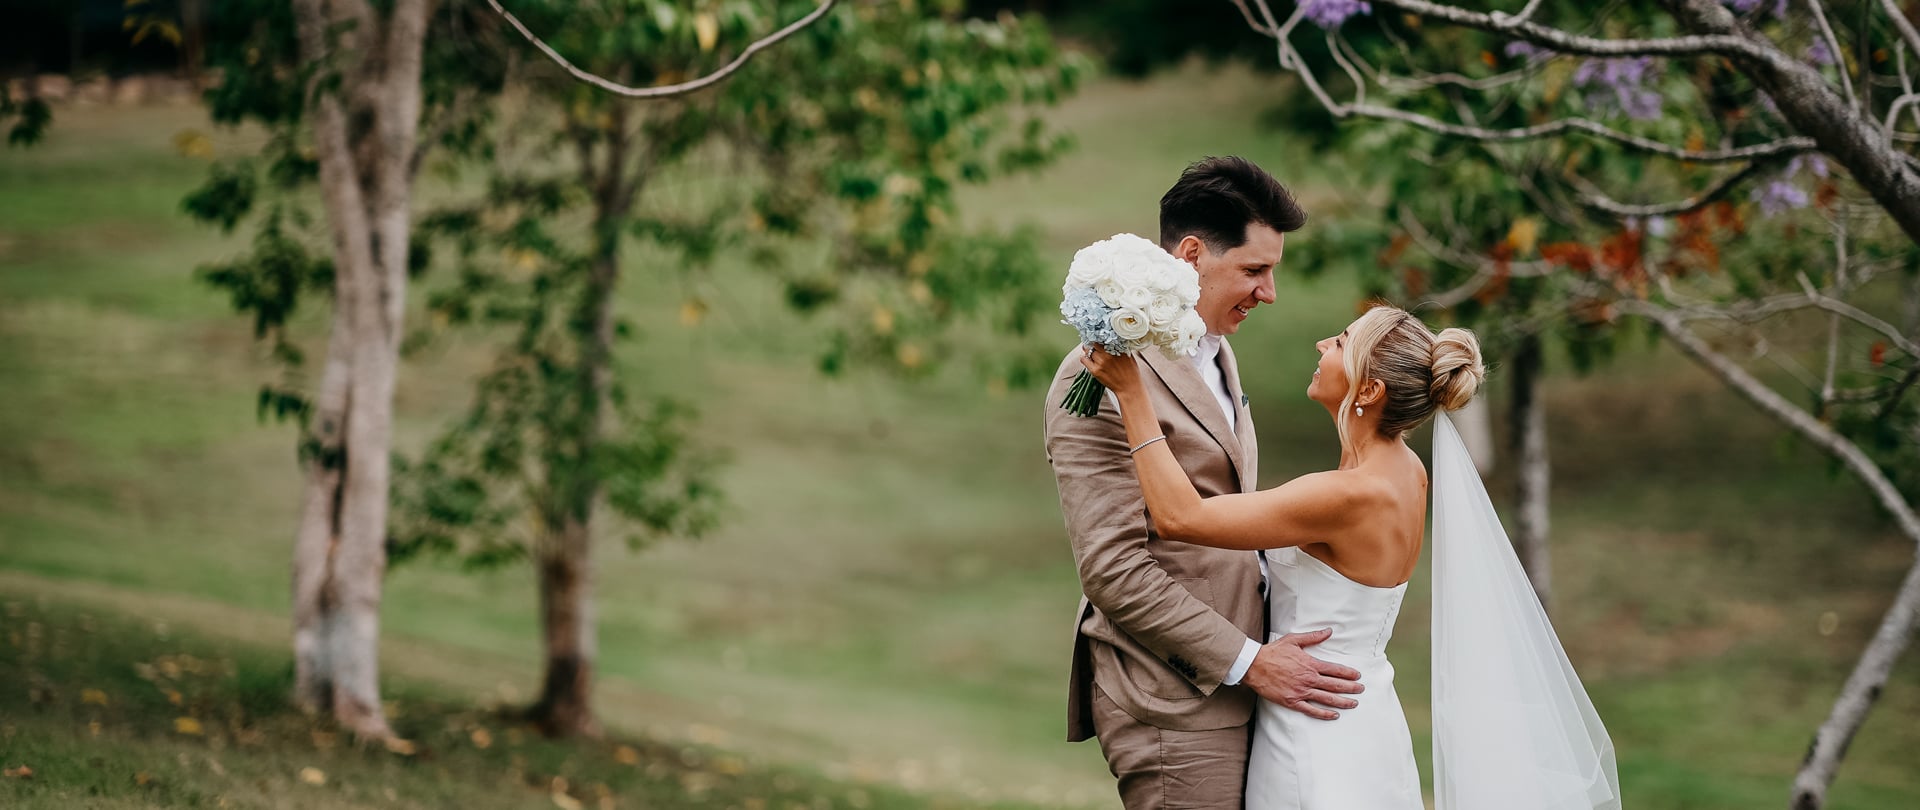 Kristiina & Lachlan Wedding Video Filmed atGold Coast,Queensland